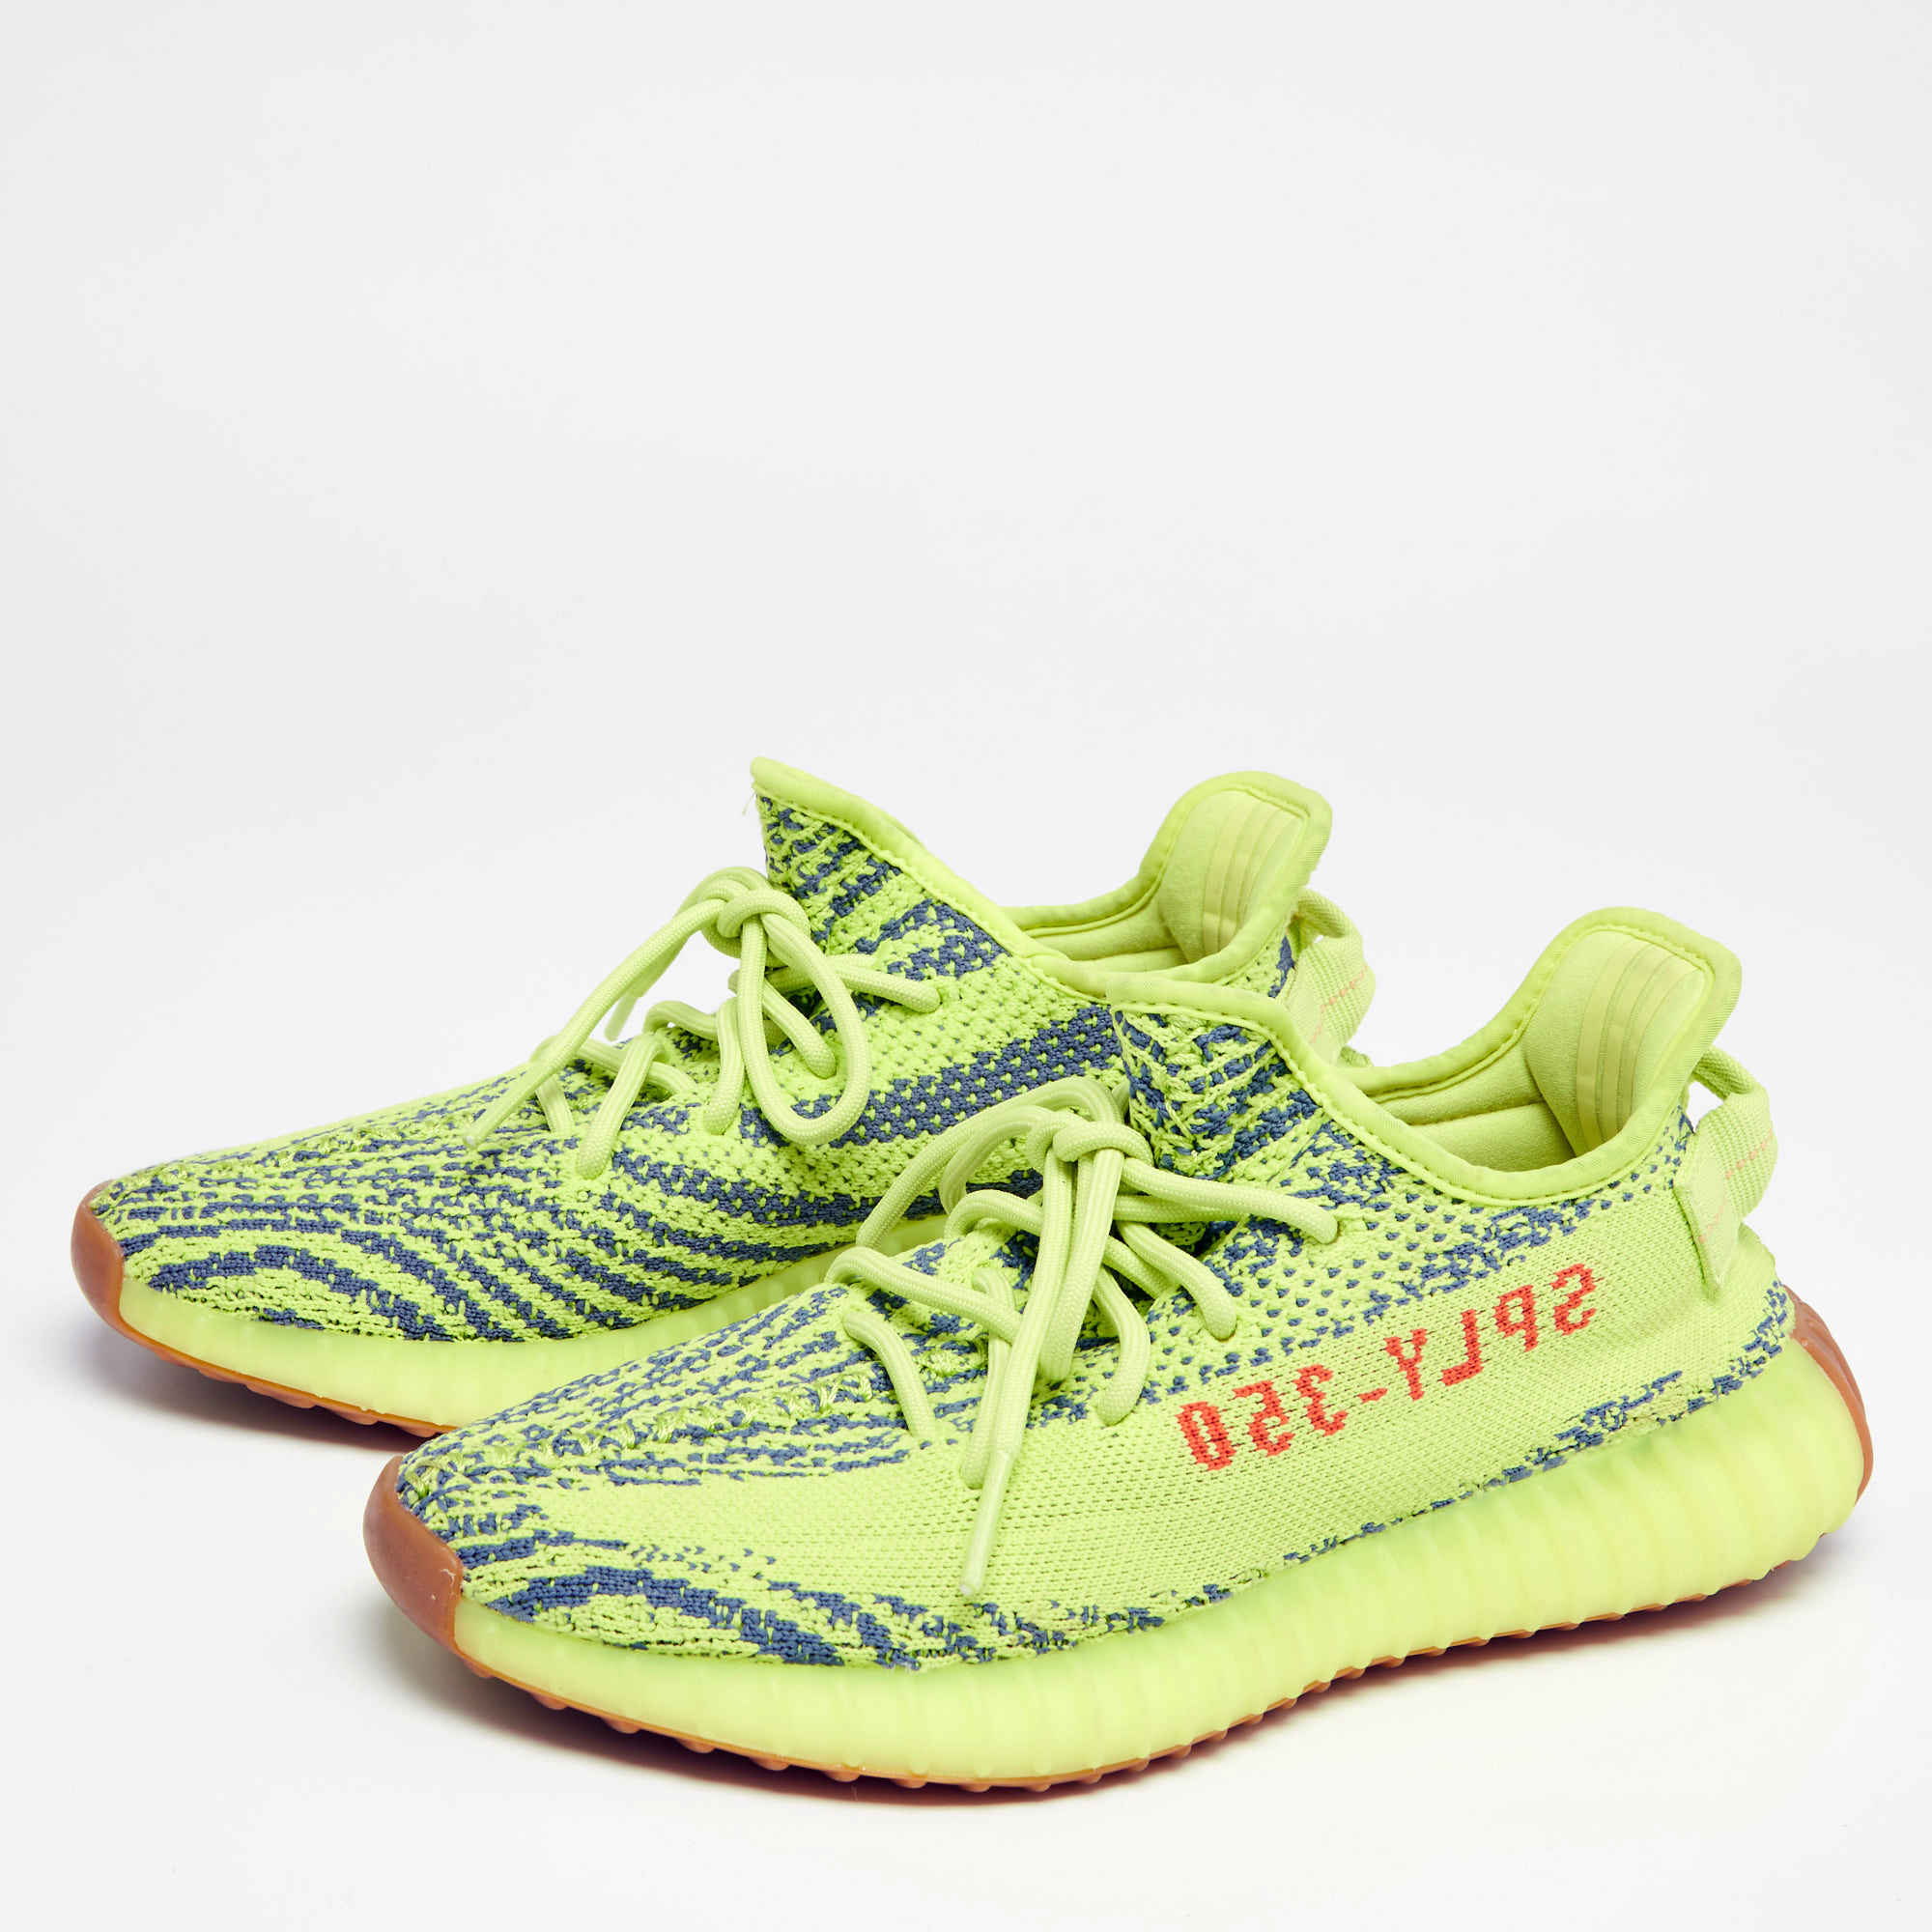 

adidas Yeezy Green Knit Fabric Boost 350 V2 Semi Frozen Sneakers Size 39.2/3